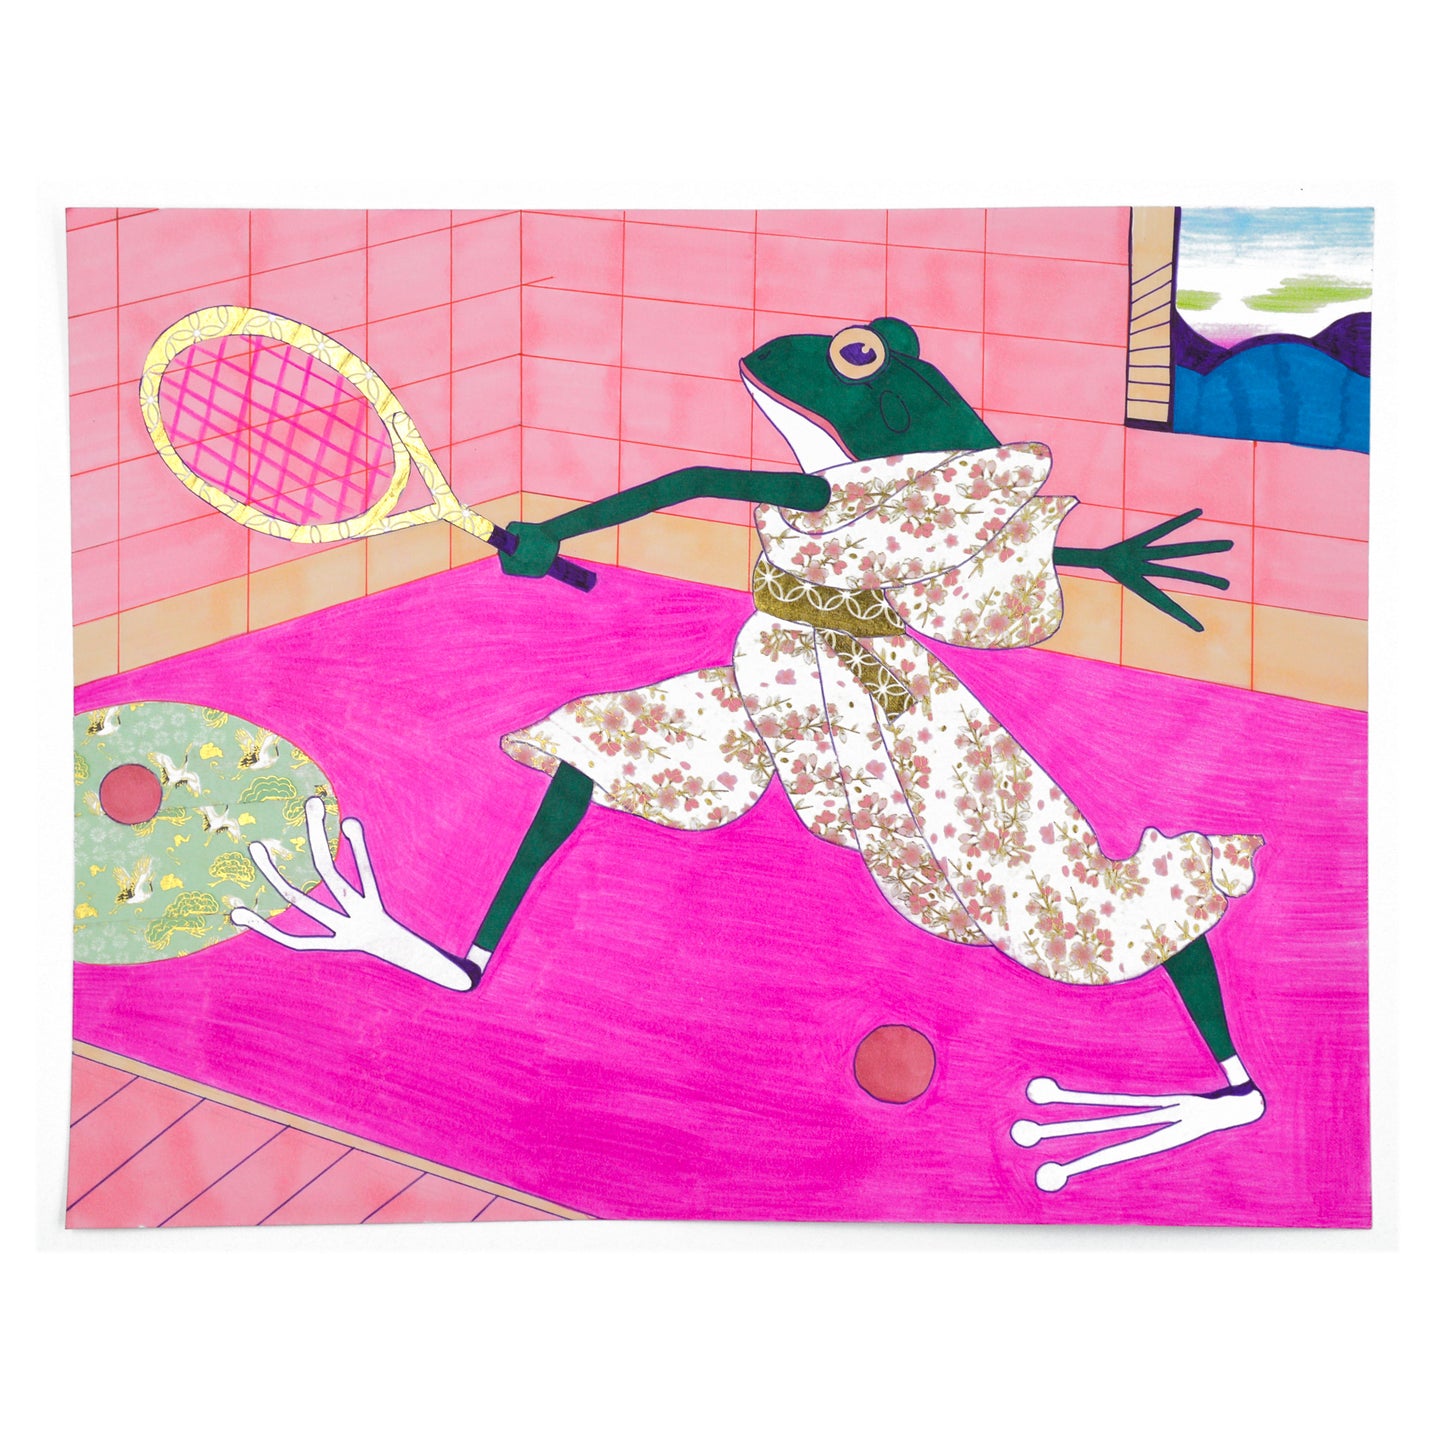 Froggie Playing Tennis